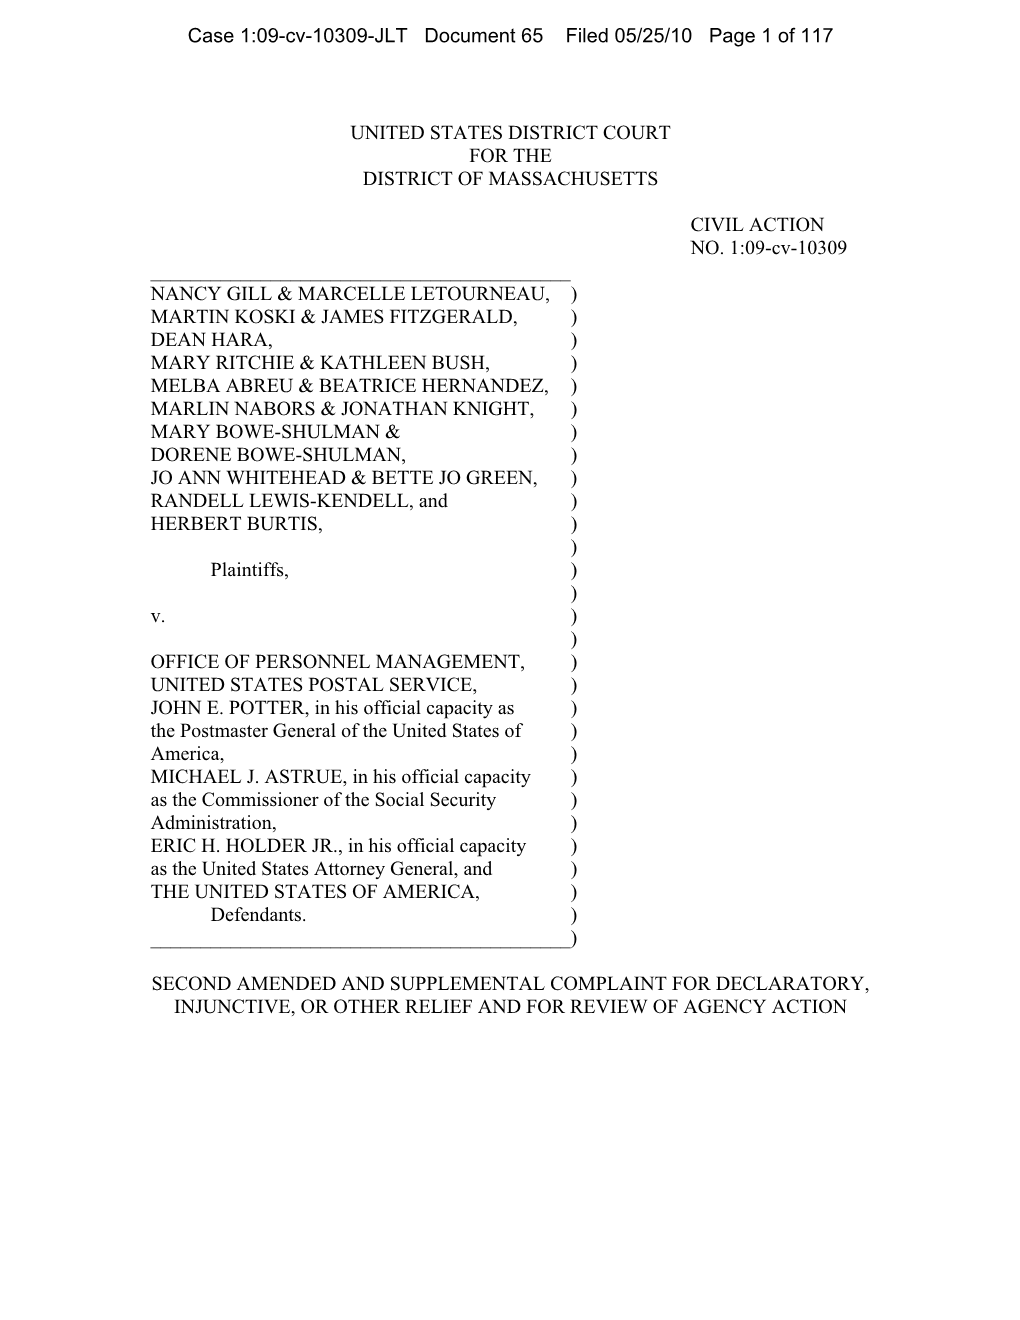 Case 1:09-Cv-10309-JLT Document 65 Filed 05/25/10 Page 1 of 117